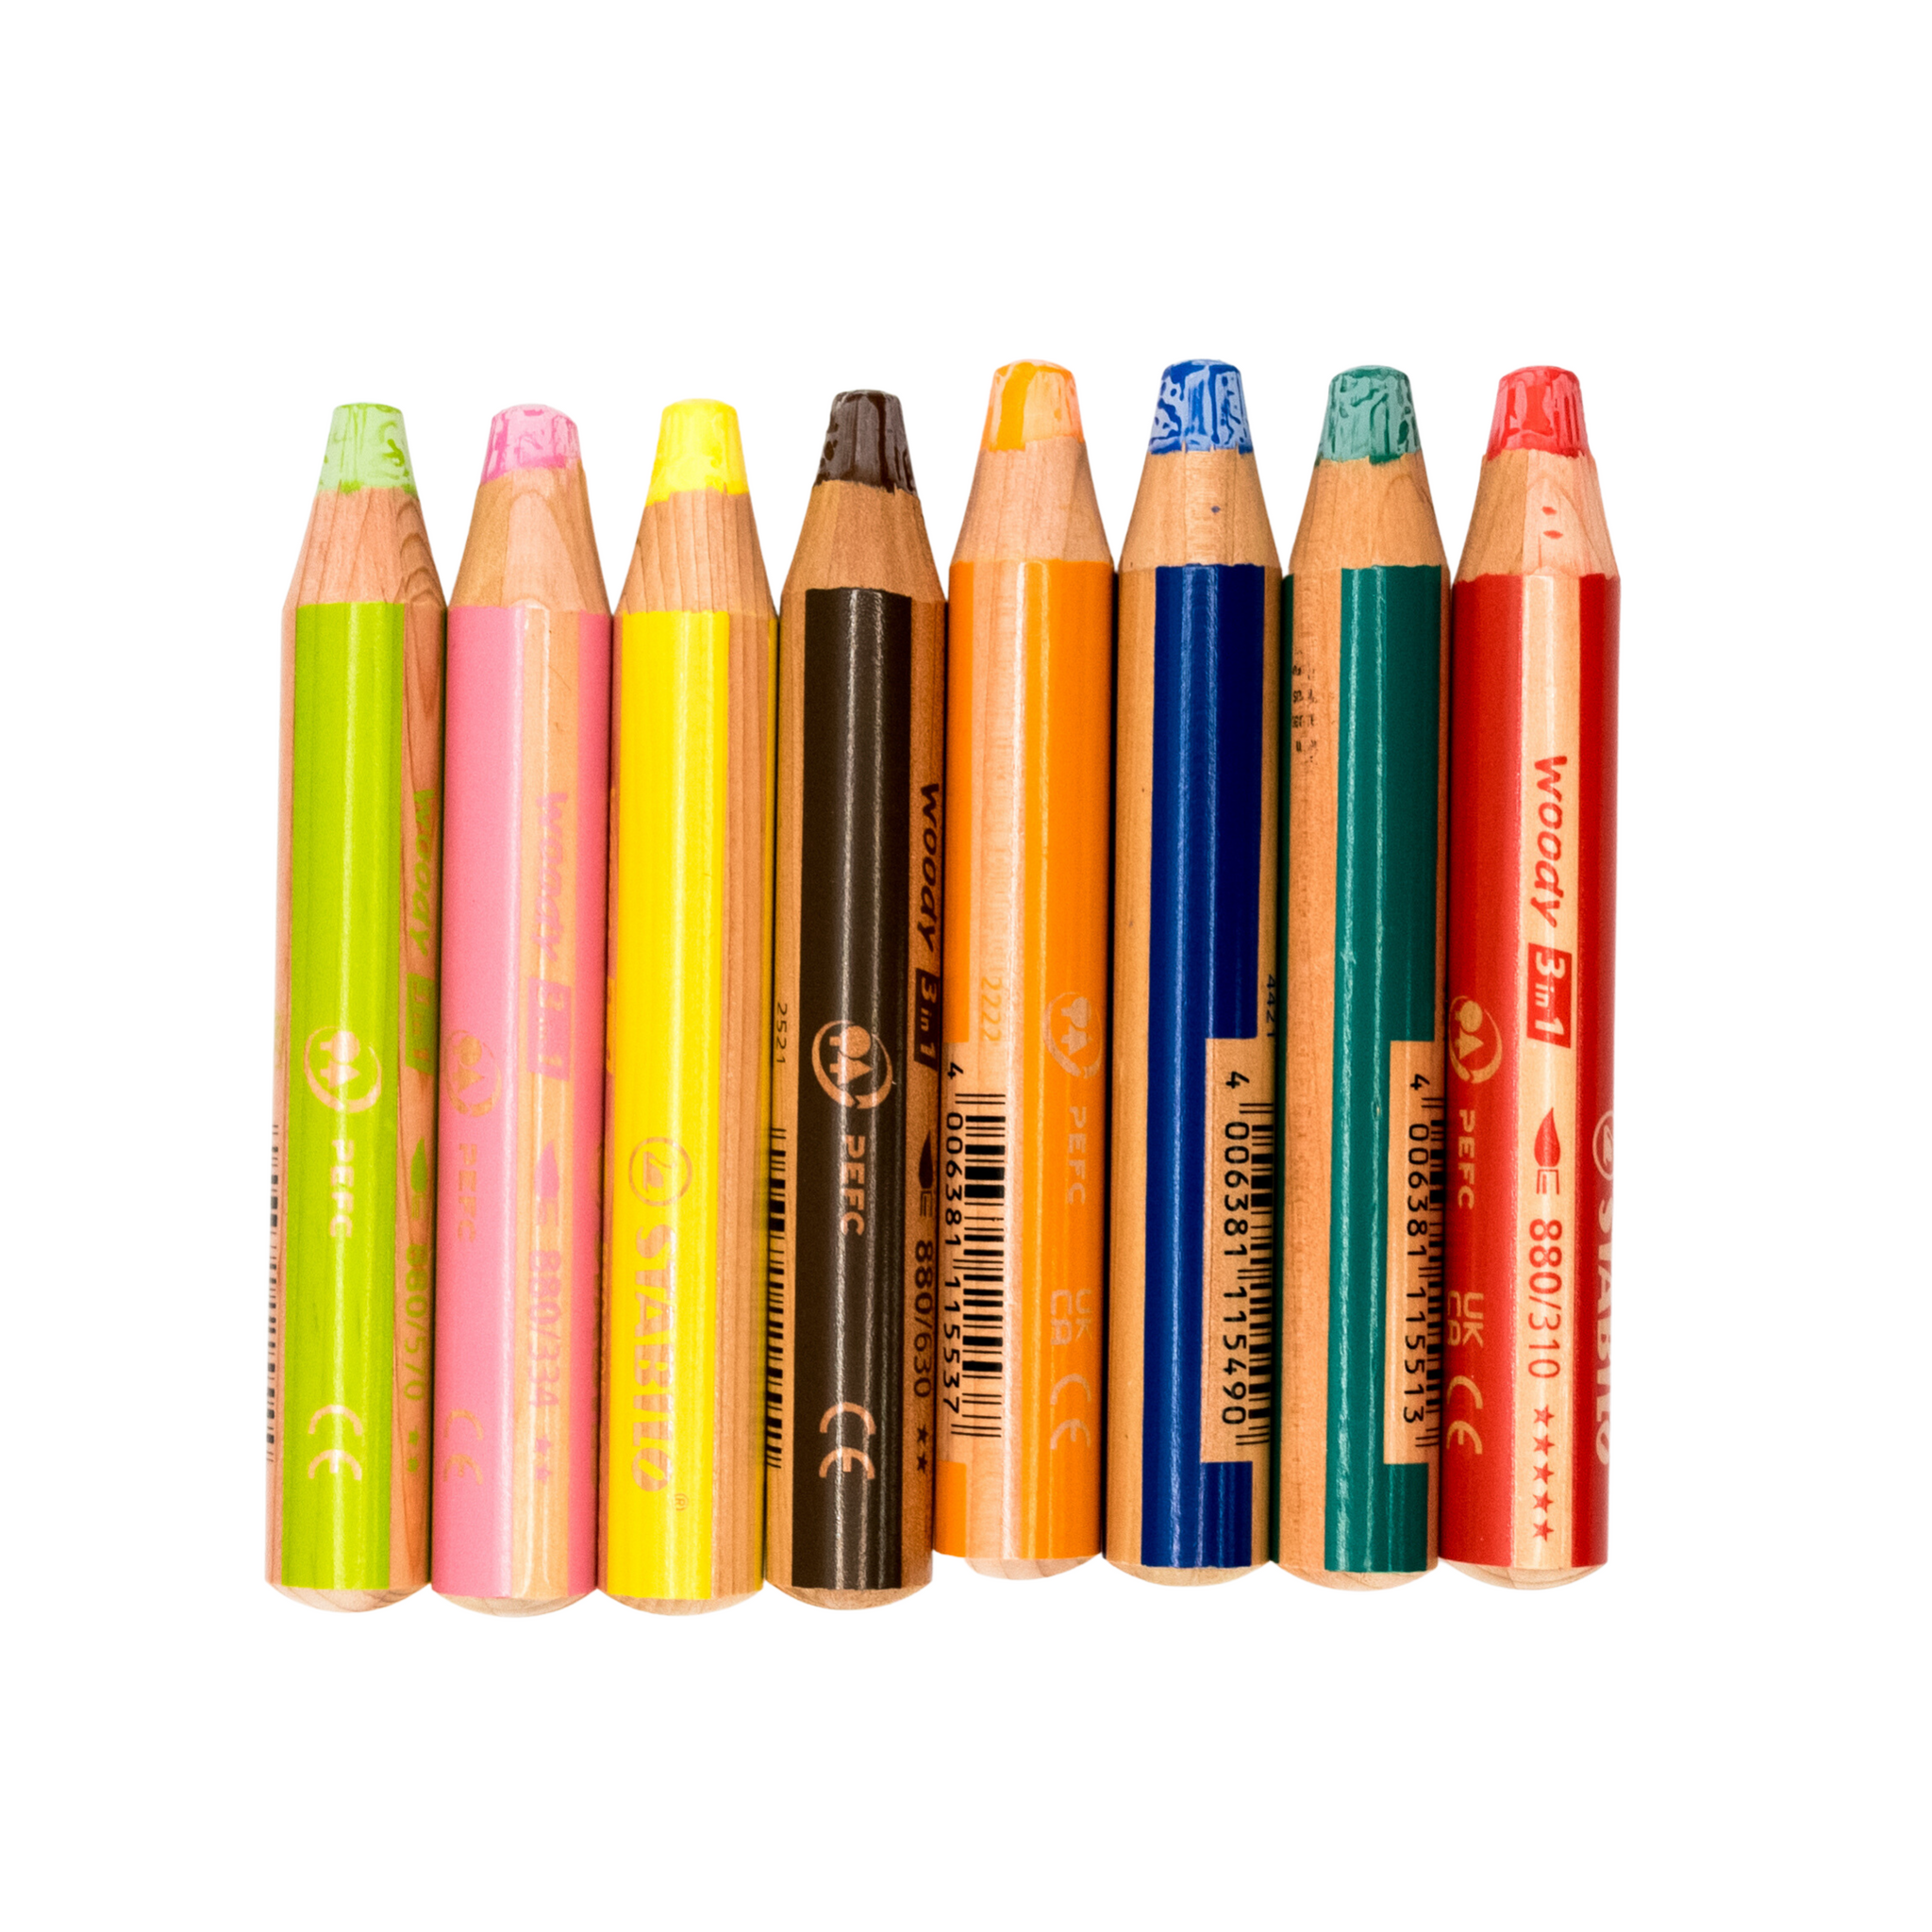 Stabilo Woody 3-In-1 Pencils